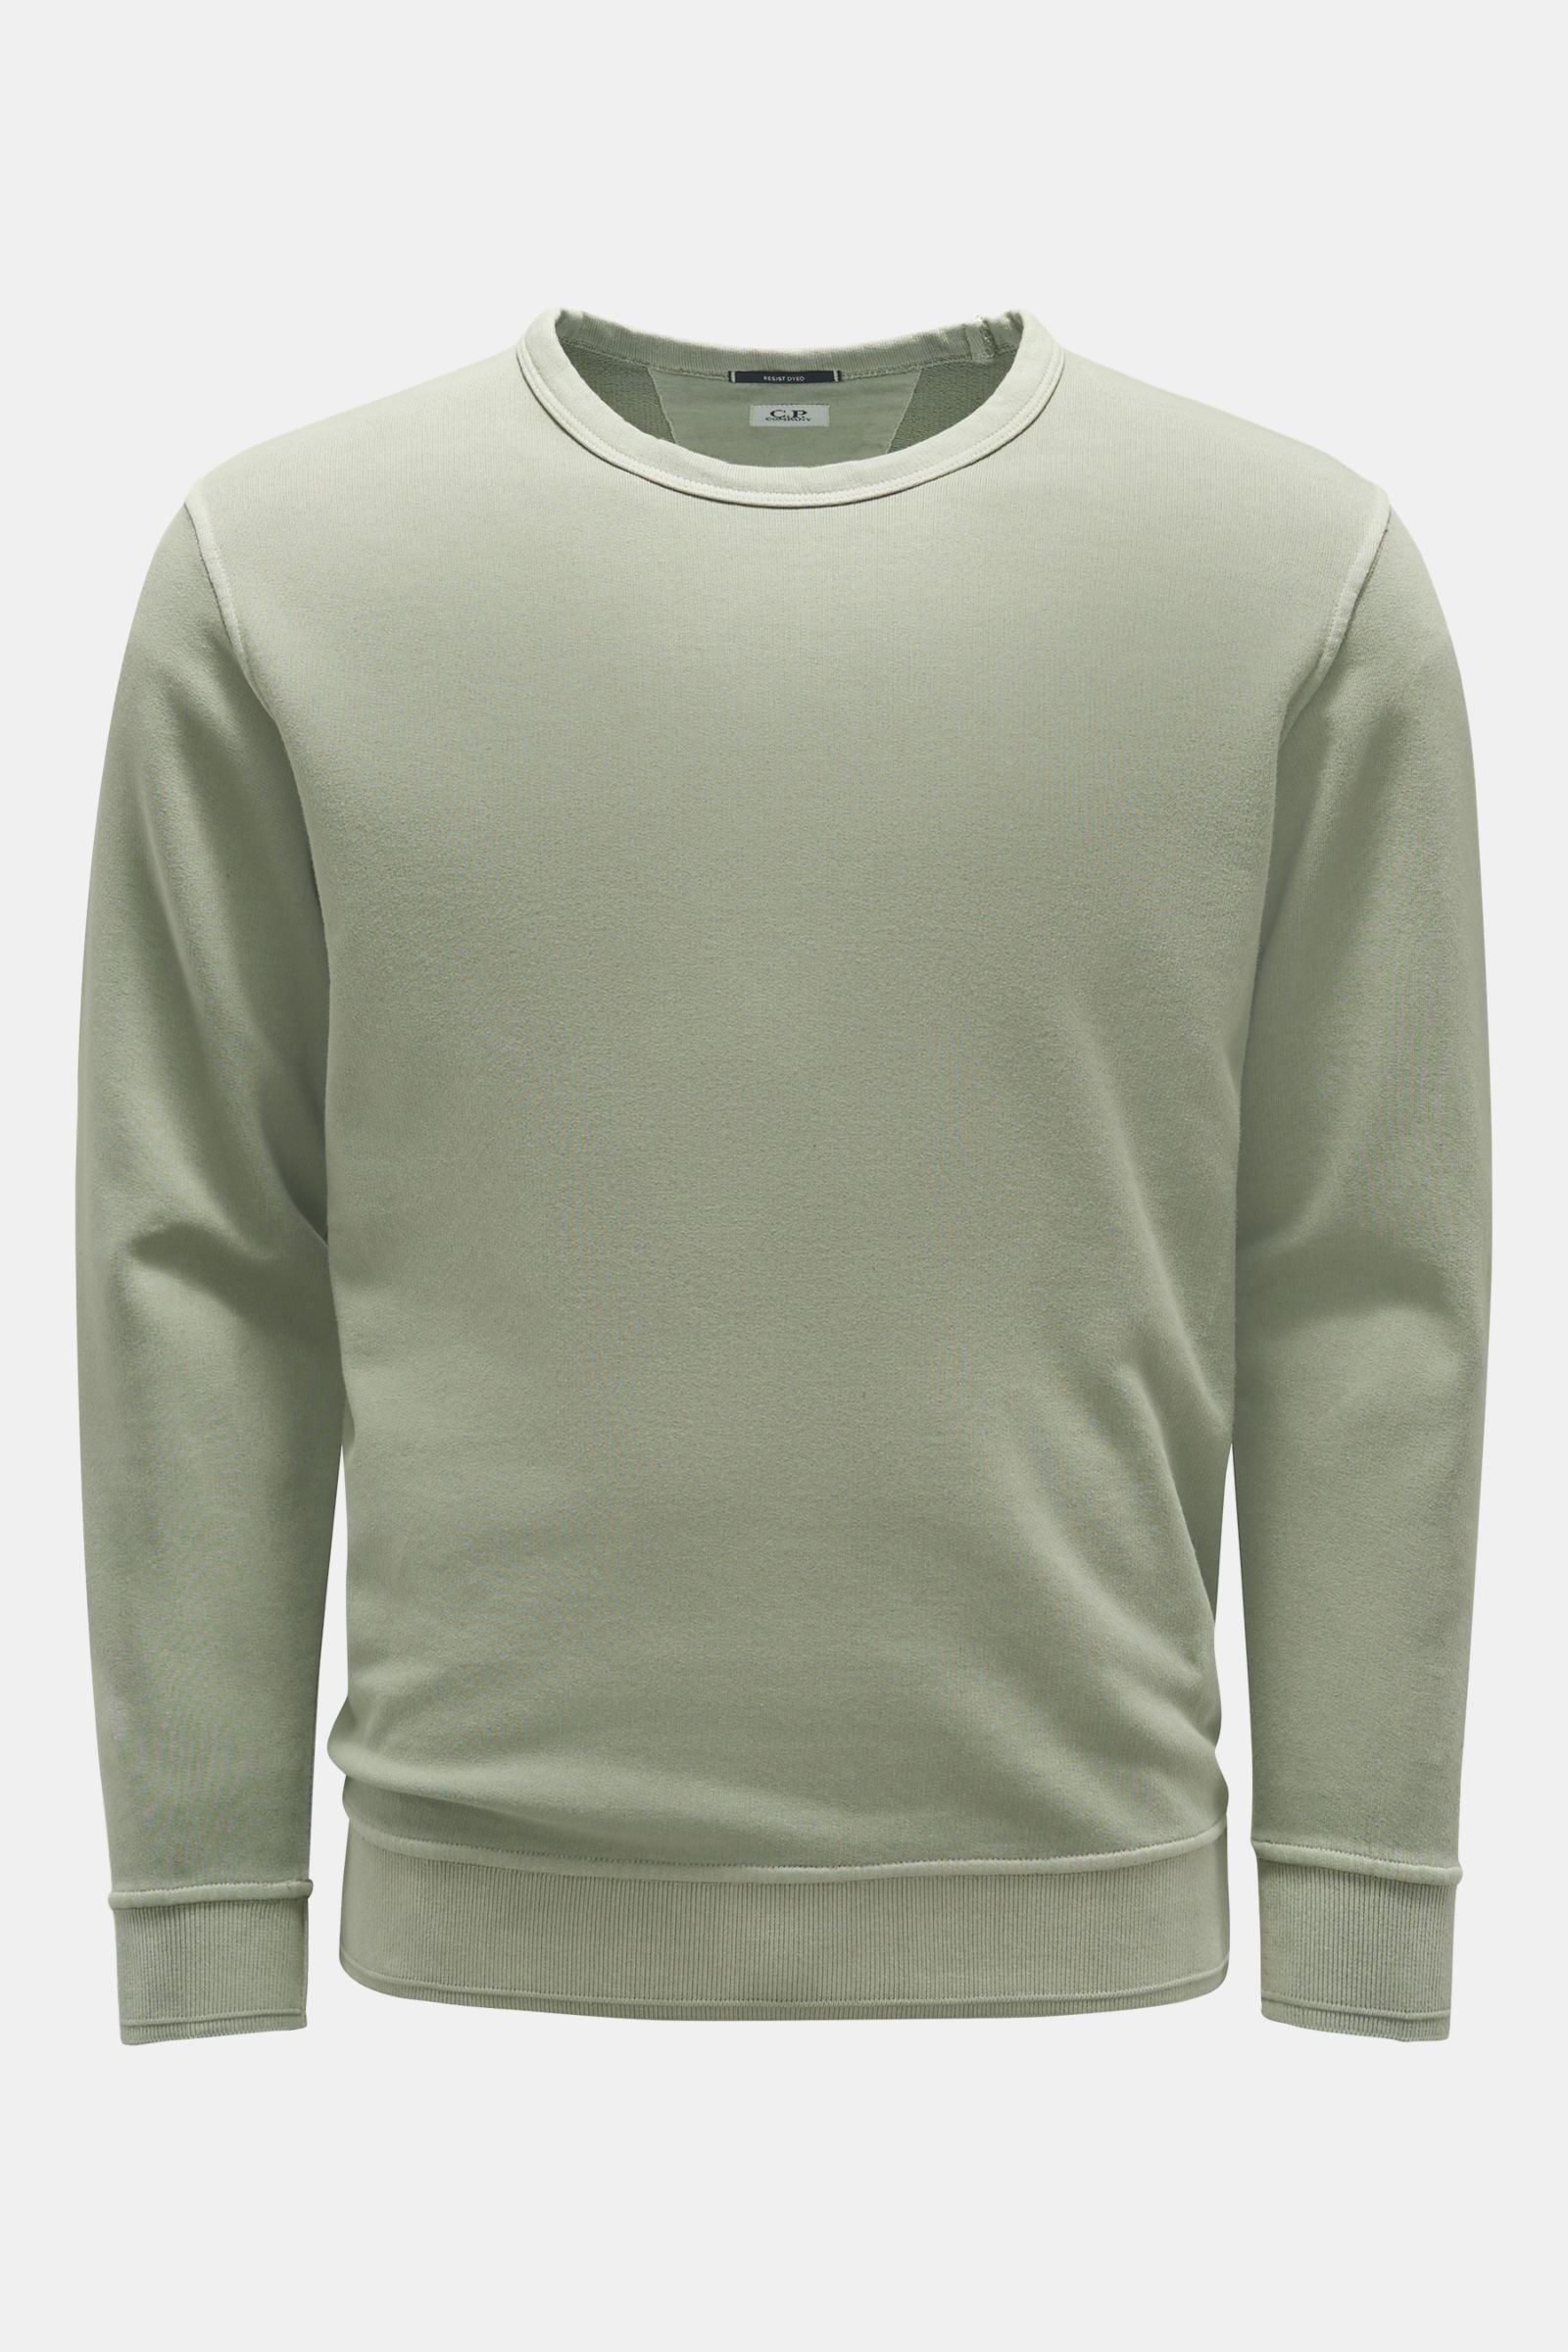 Crew neck sweatshirt 'Resist Dyed' grey-green